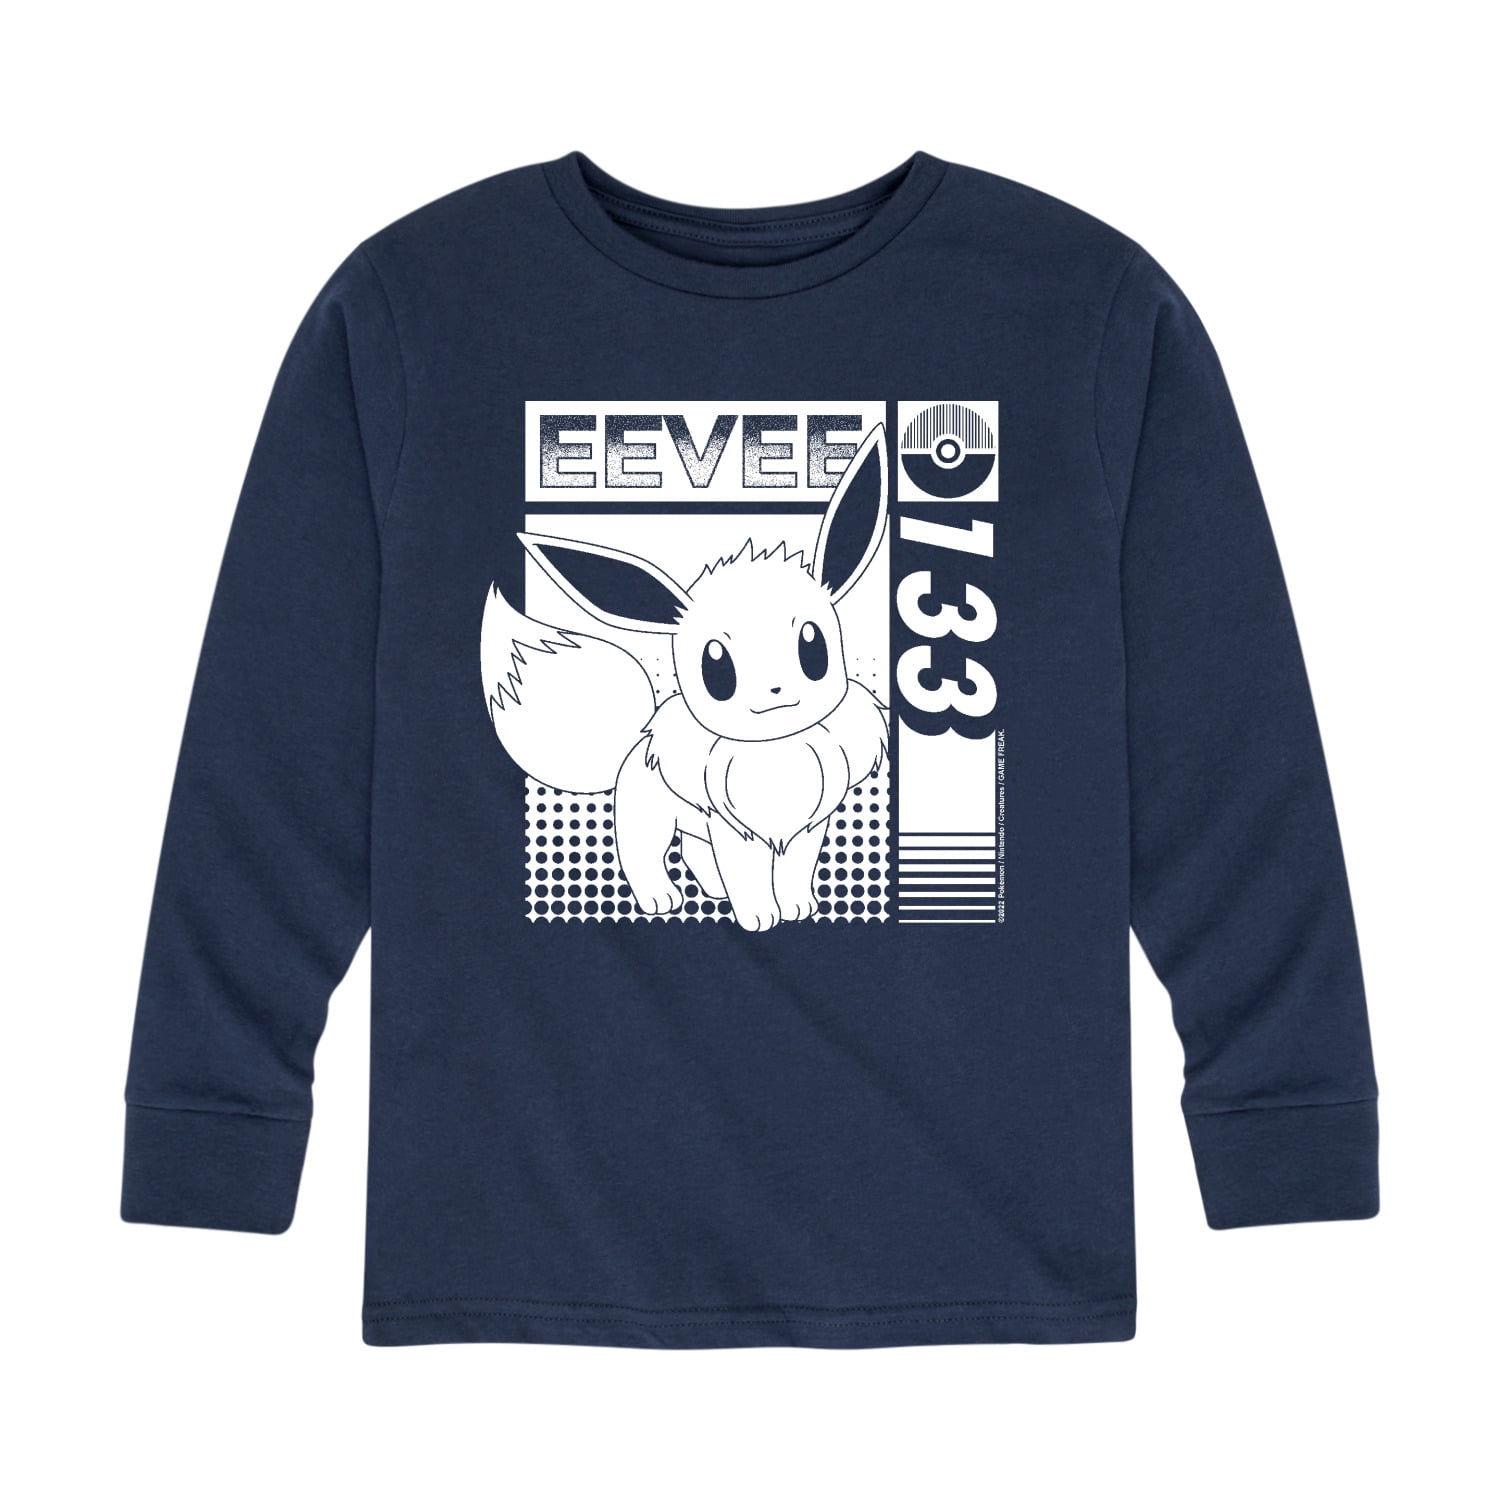 YOUTH Eeveelution shirt • EEVEE T-shirt • Pokémon • YOUTH size